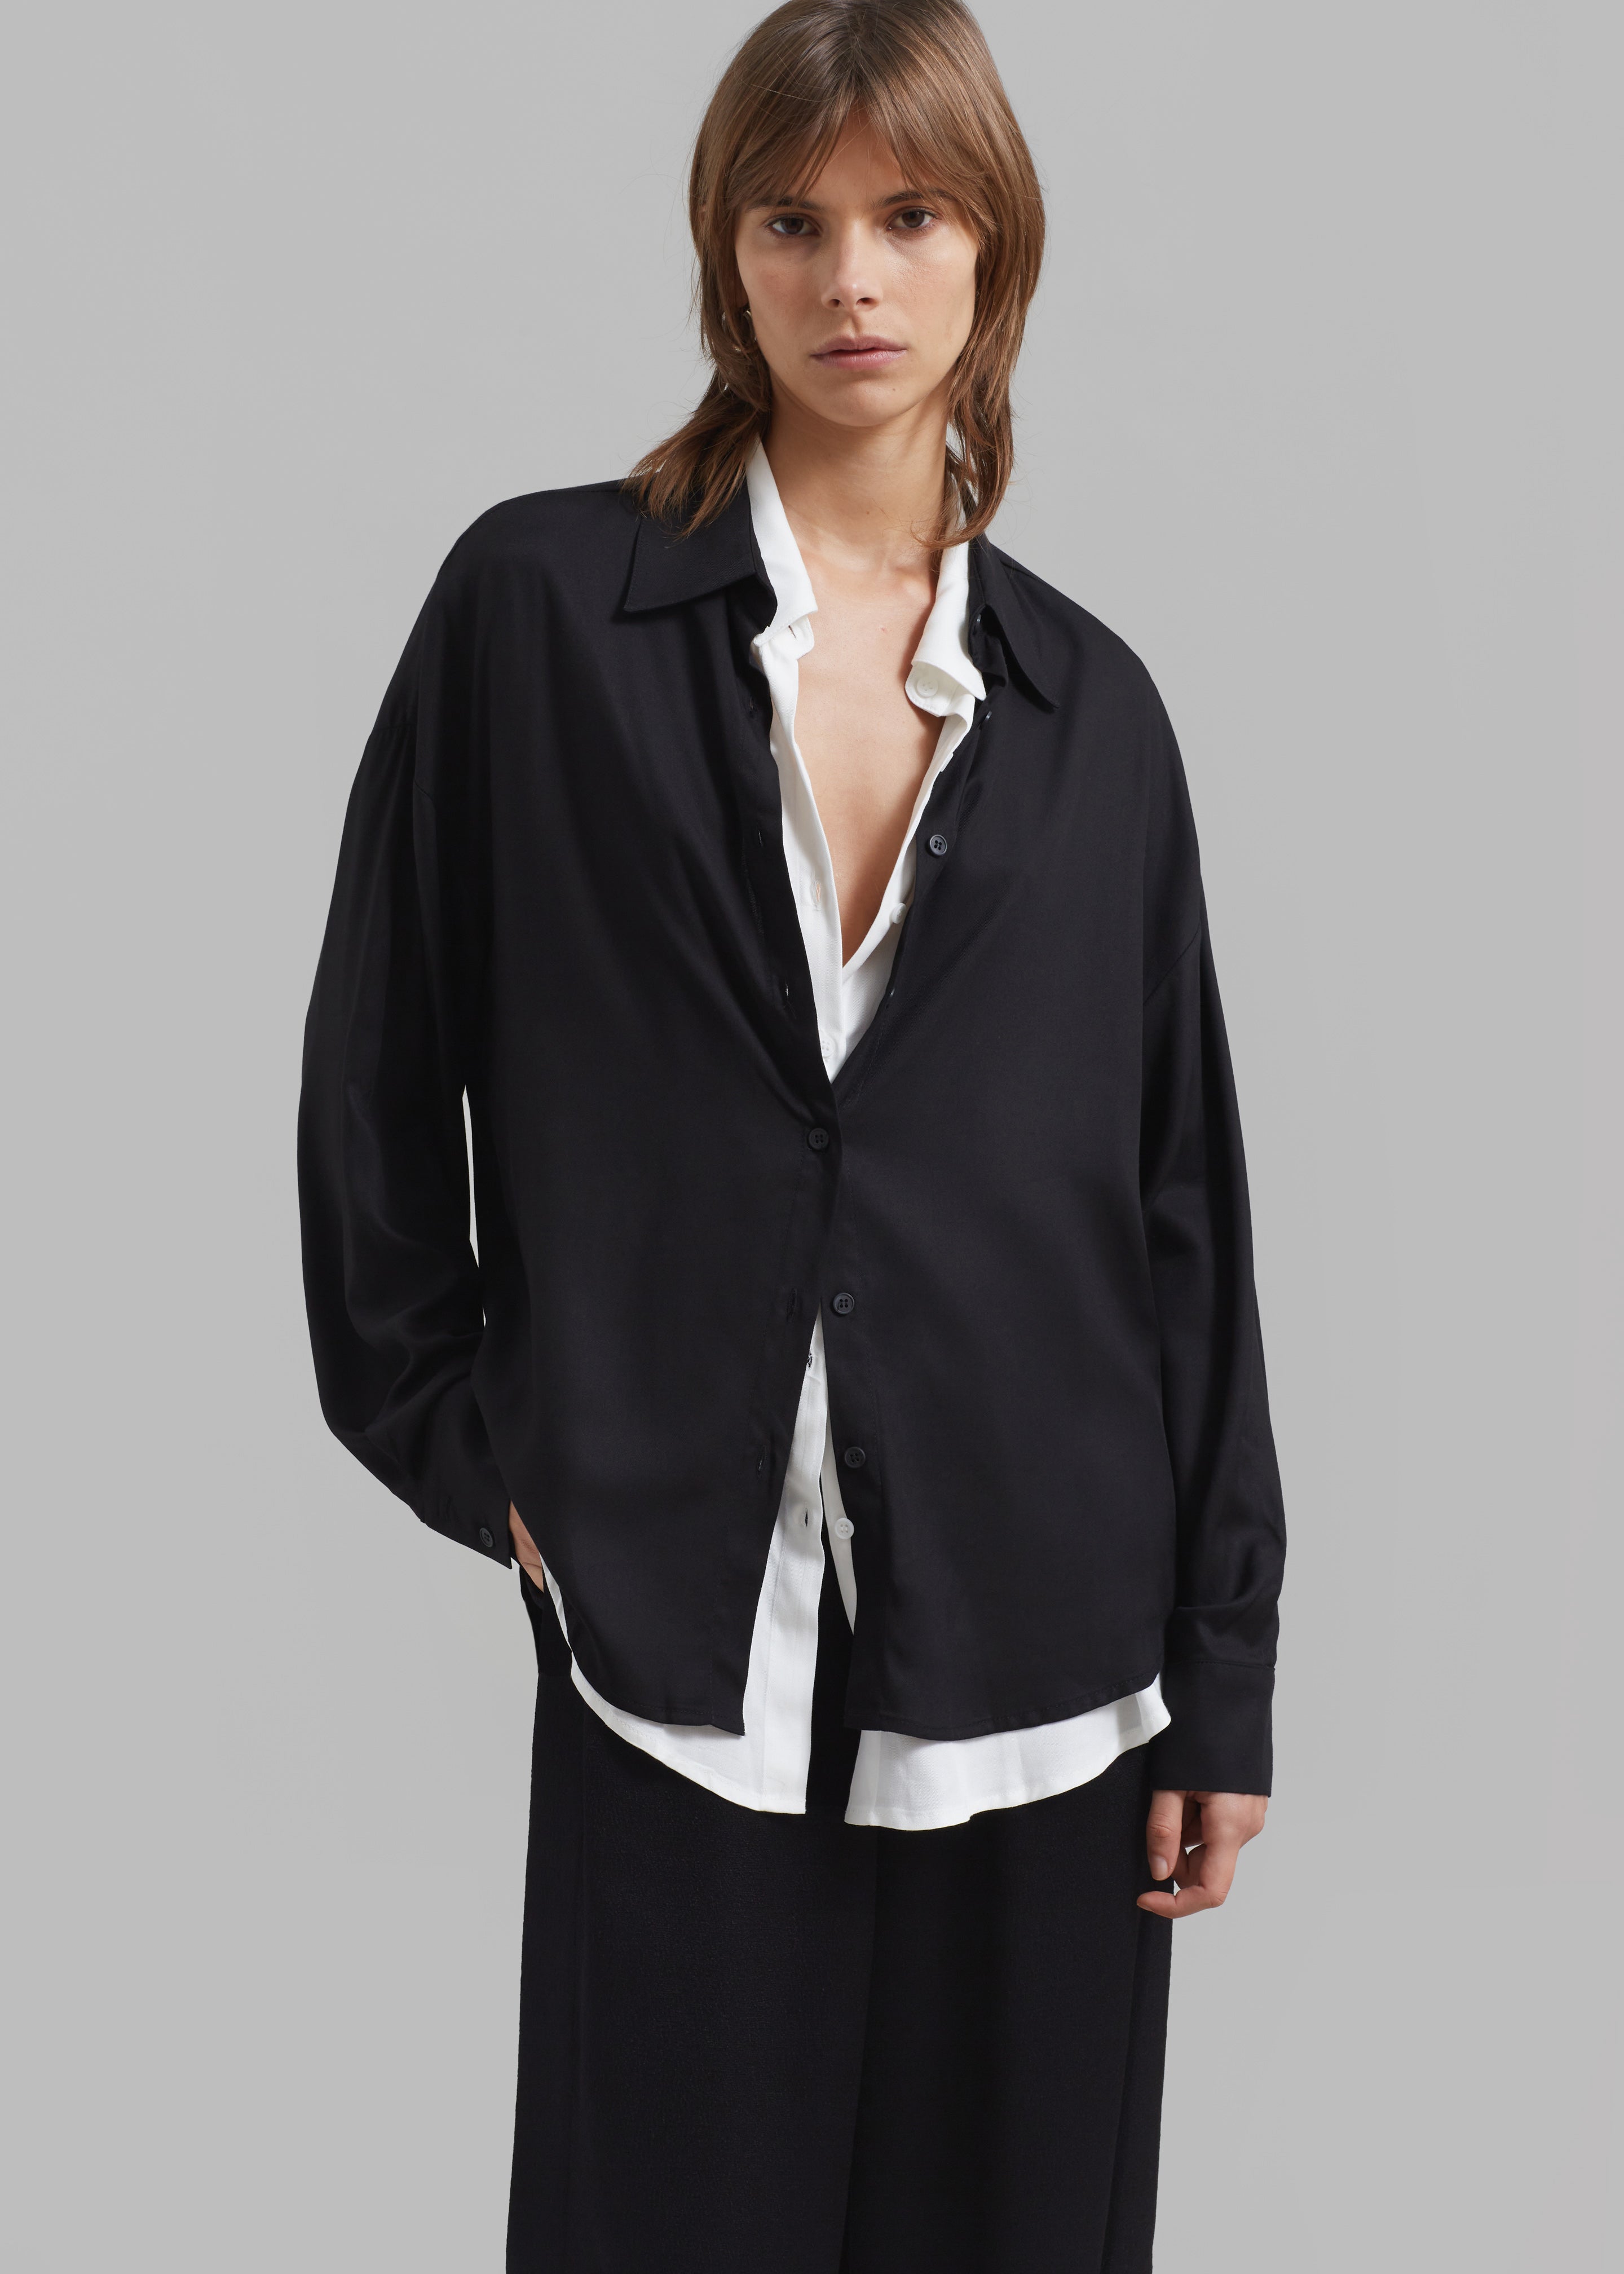 Ann Double Layer Shirt - Black/White - 1